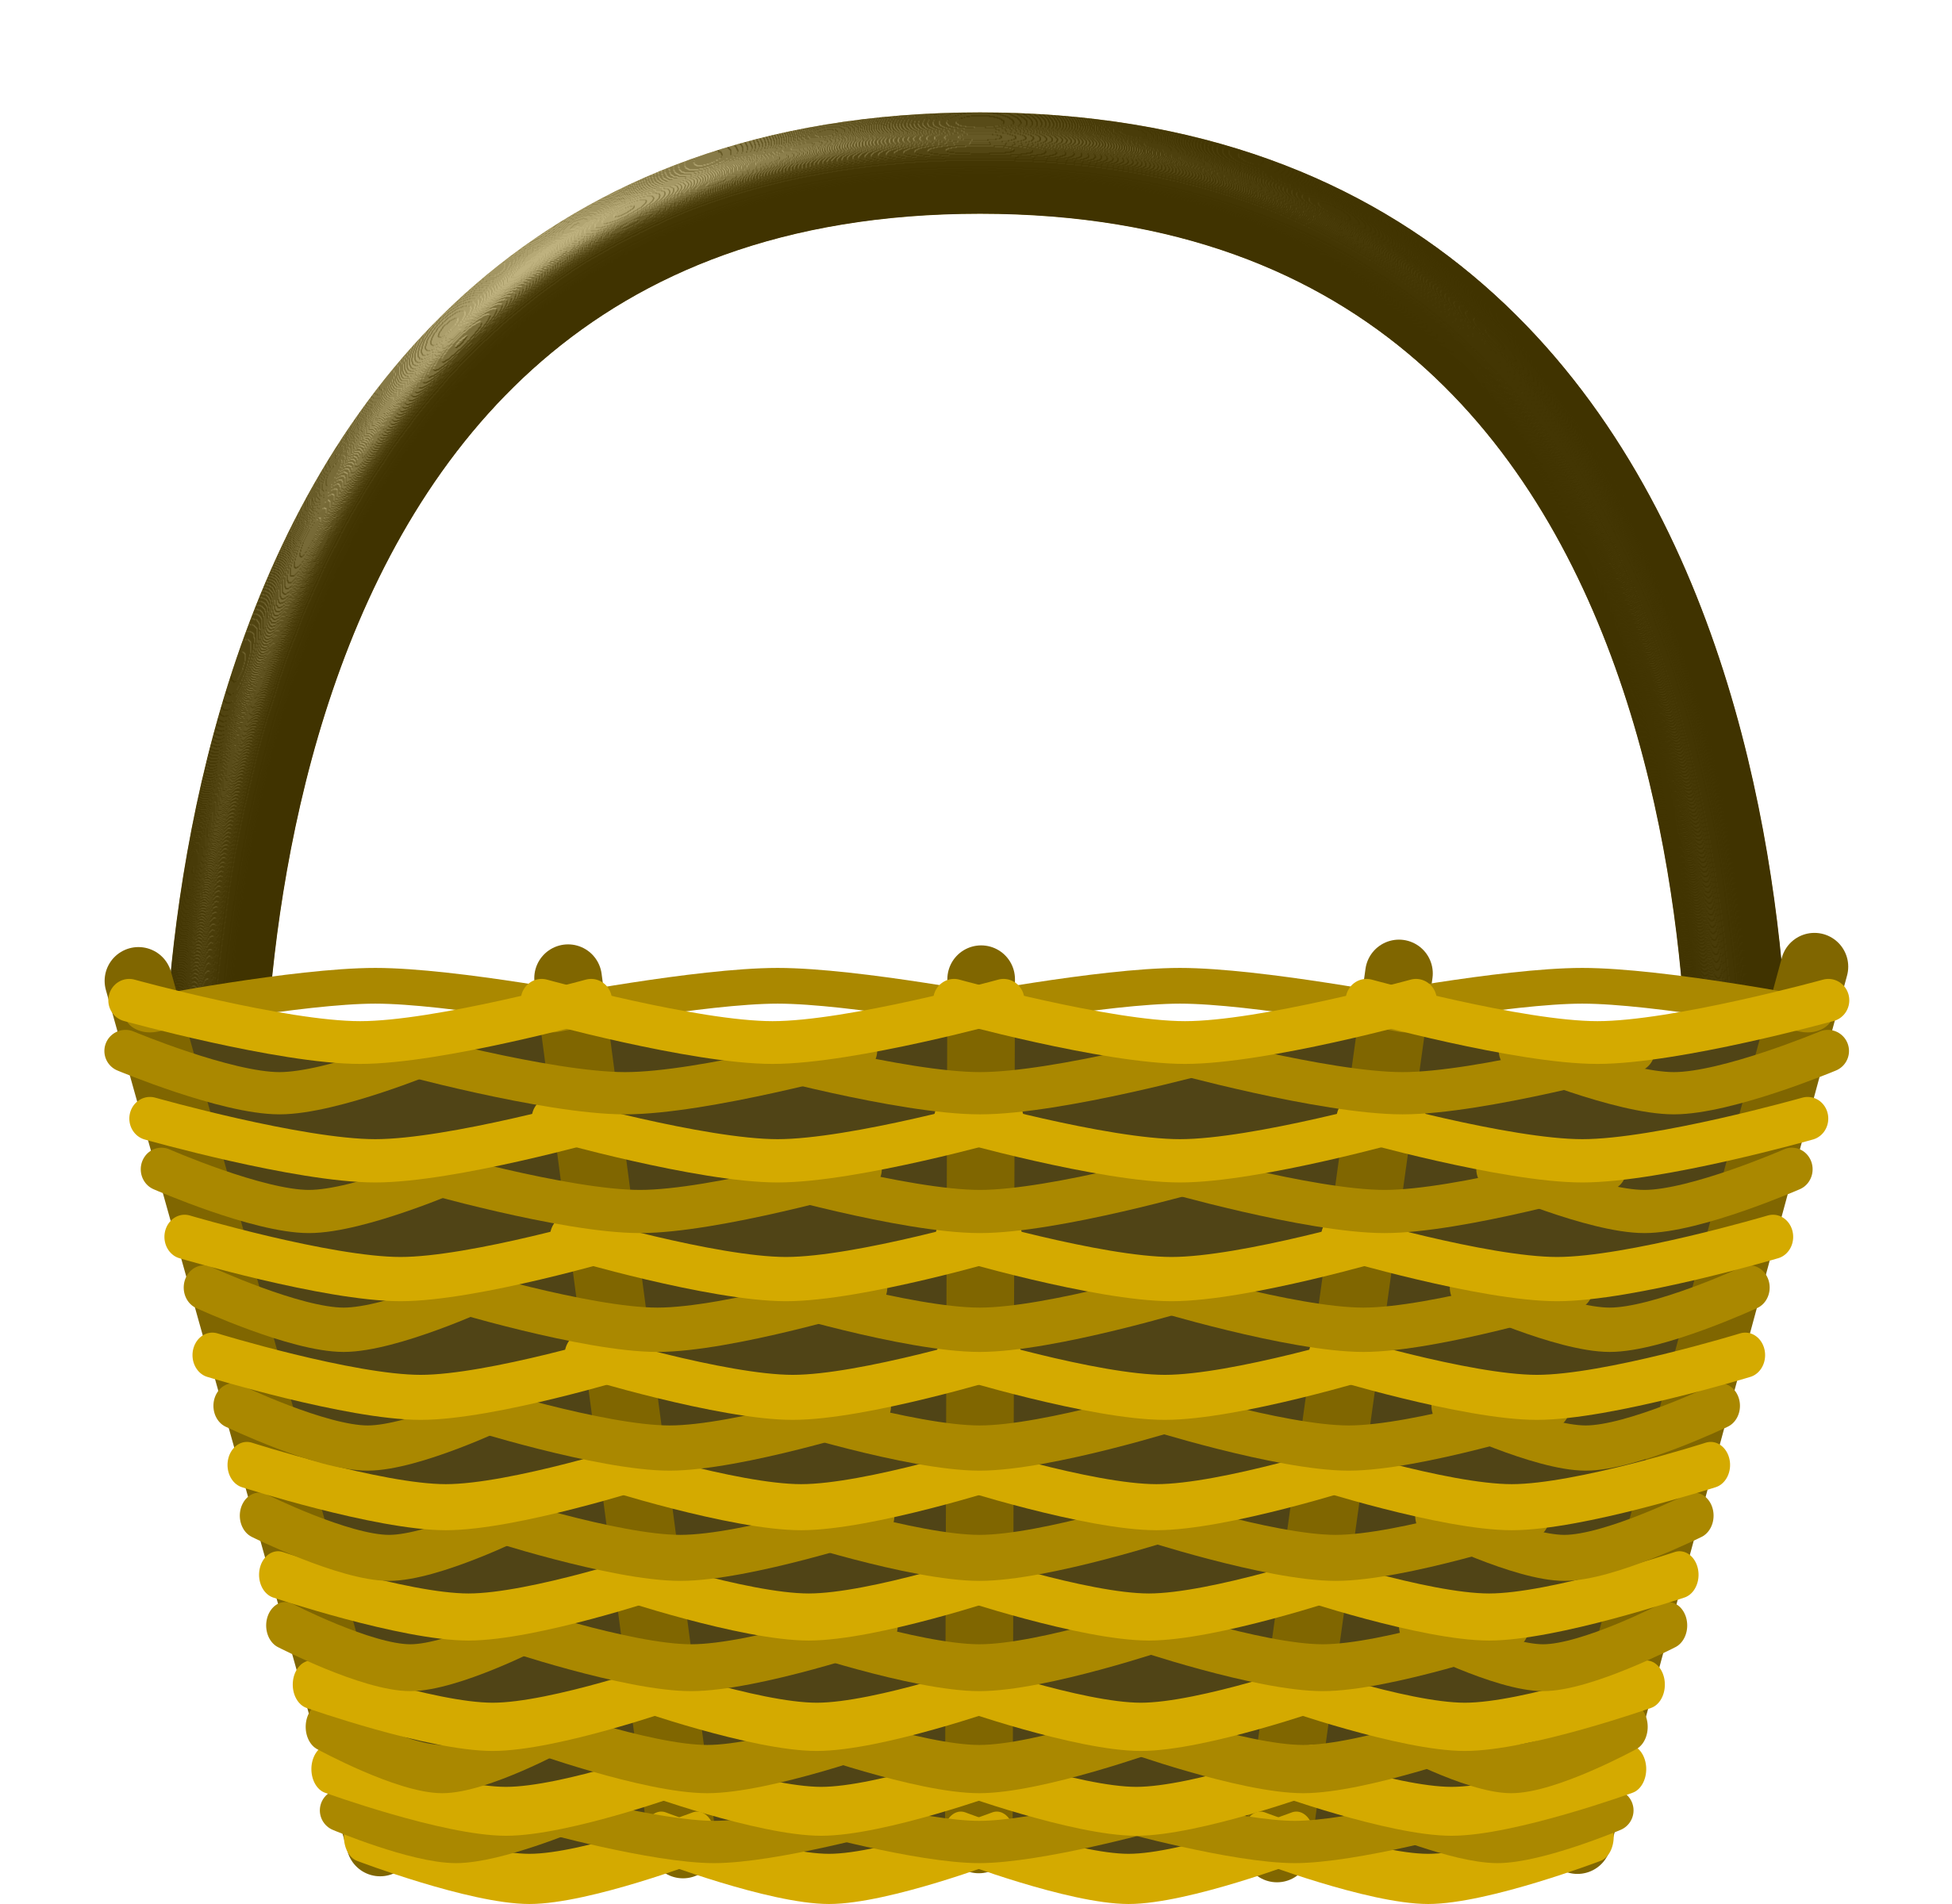 Basket clipart tumundografico - Basket Clip Art